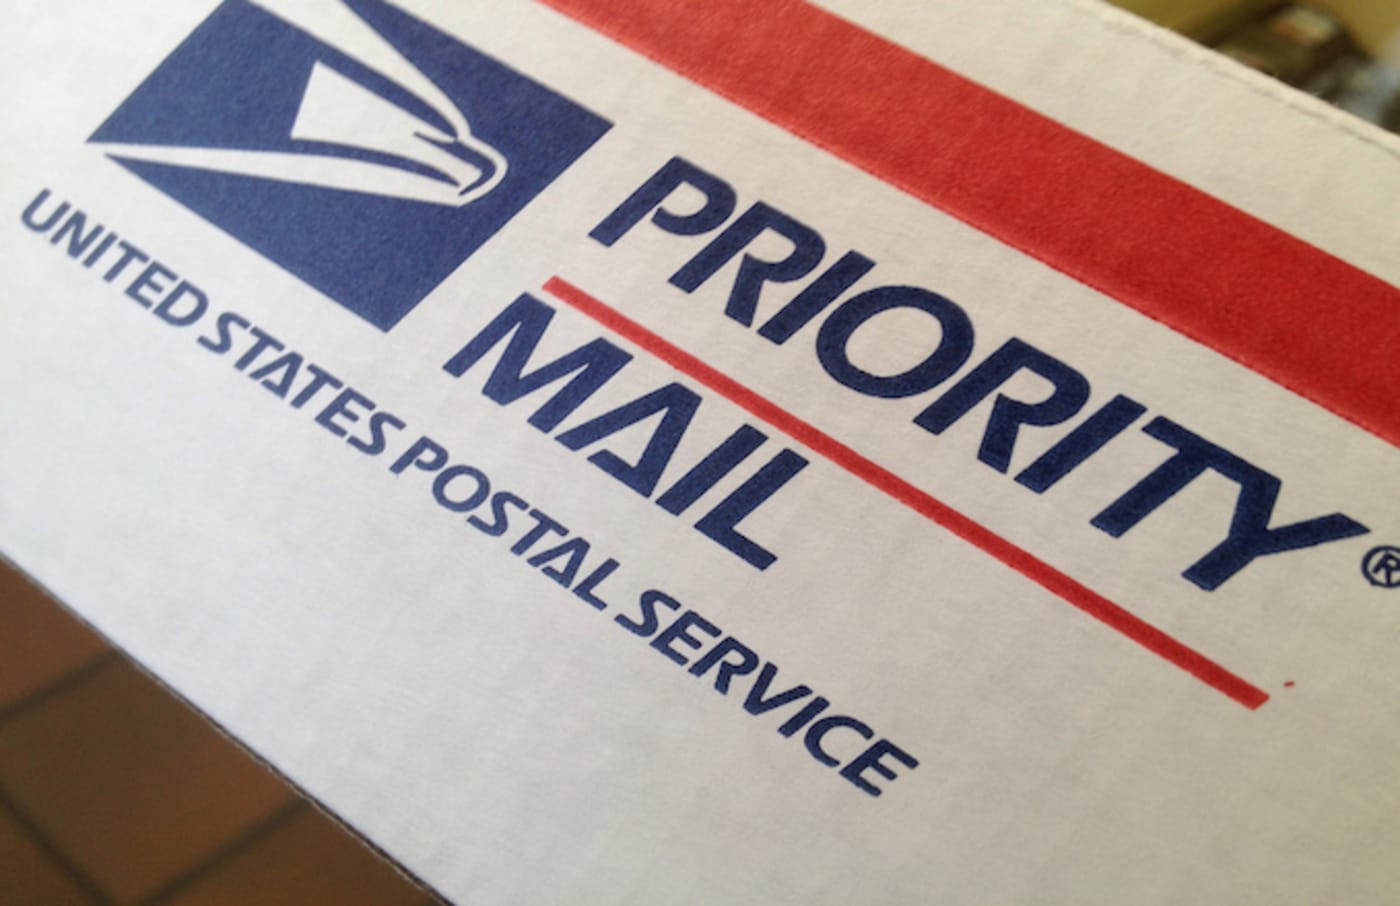 forward us postal service mail